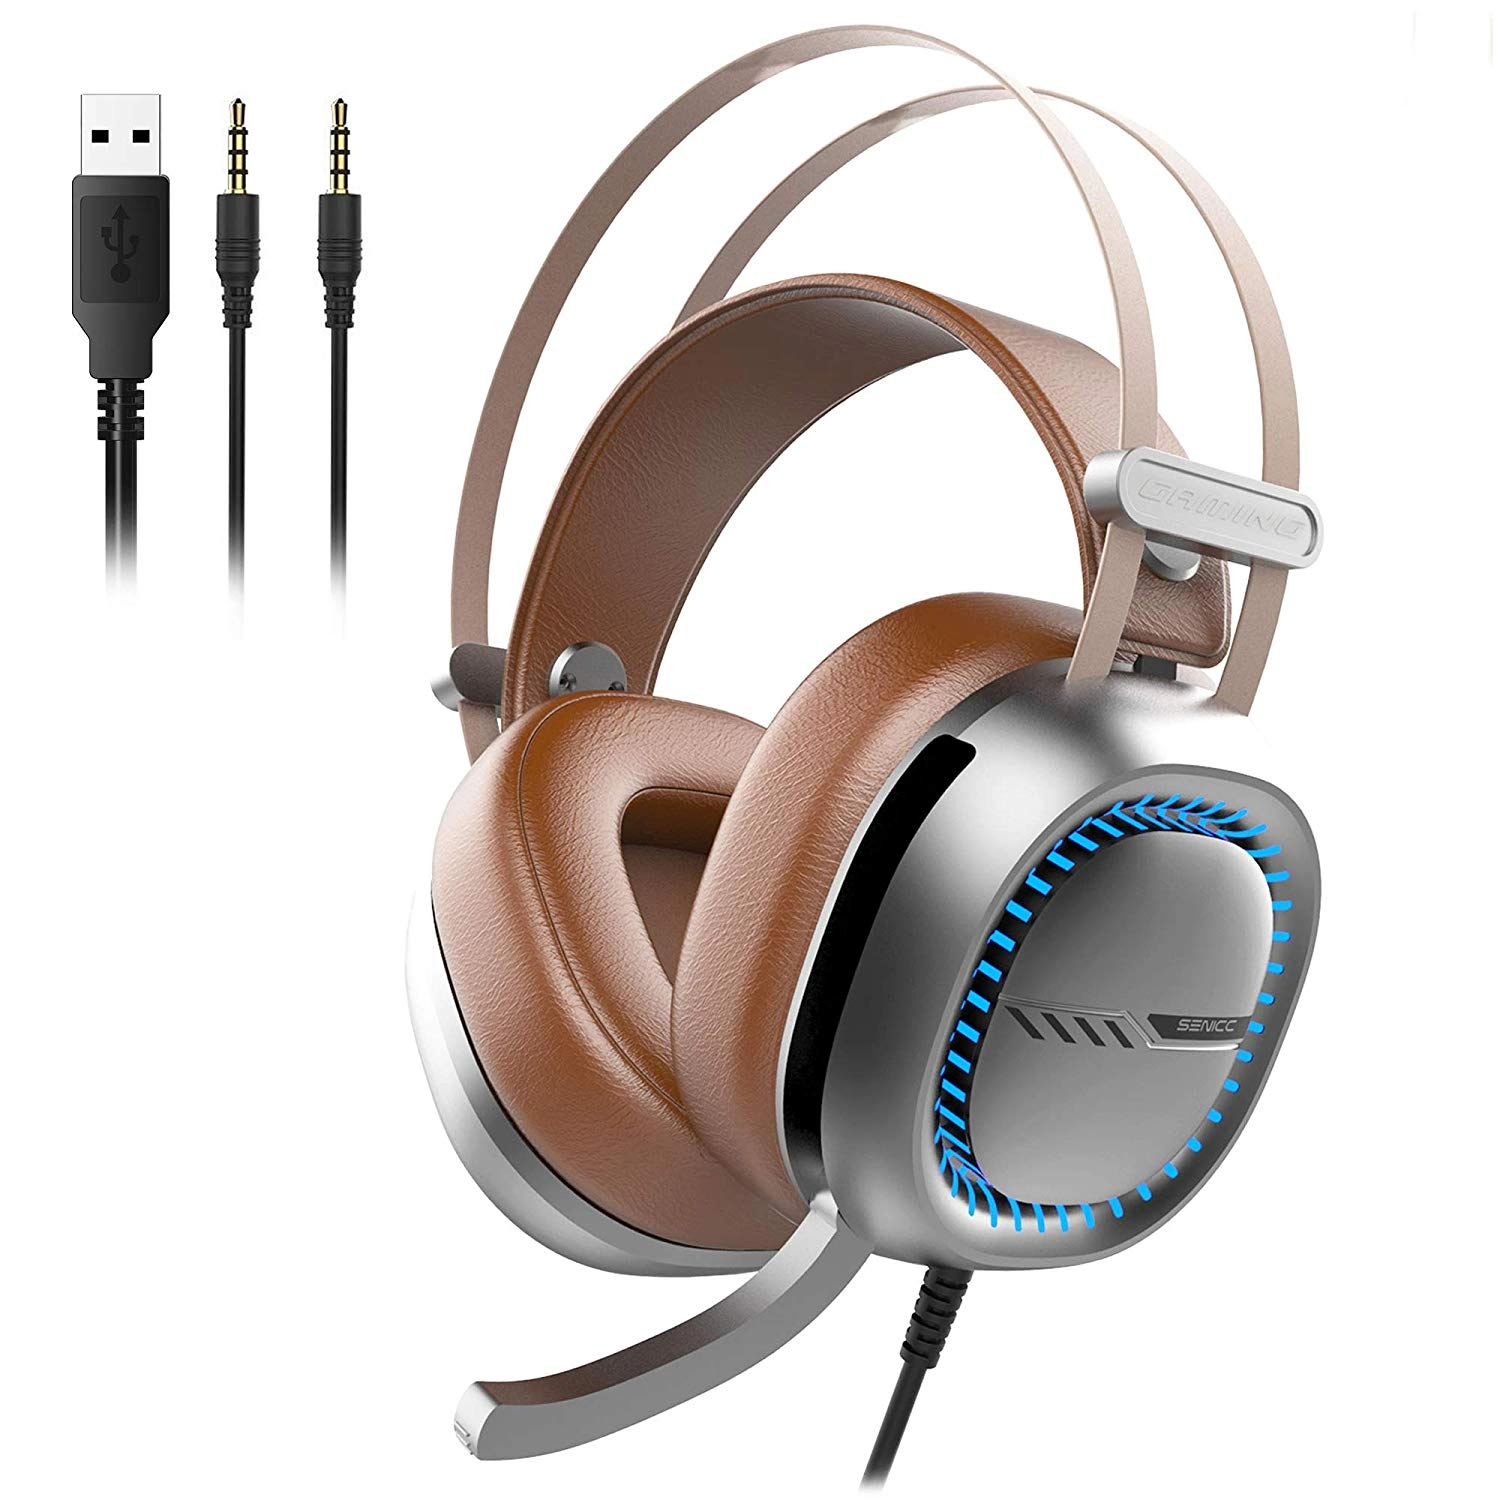 Somic W245 stereo gaming headset 40mm speaker 3.5mm+USB plug big ear cushion with LED light OEM/ODM